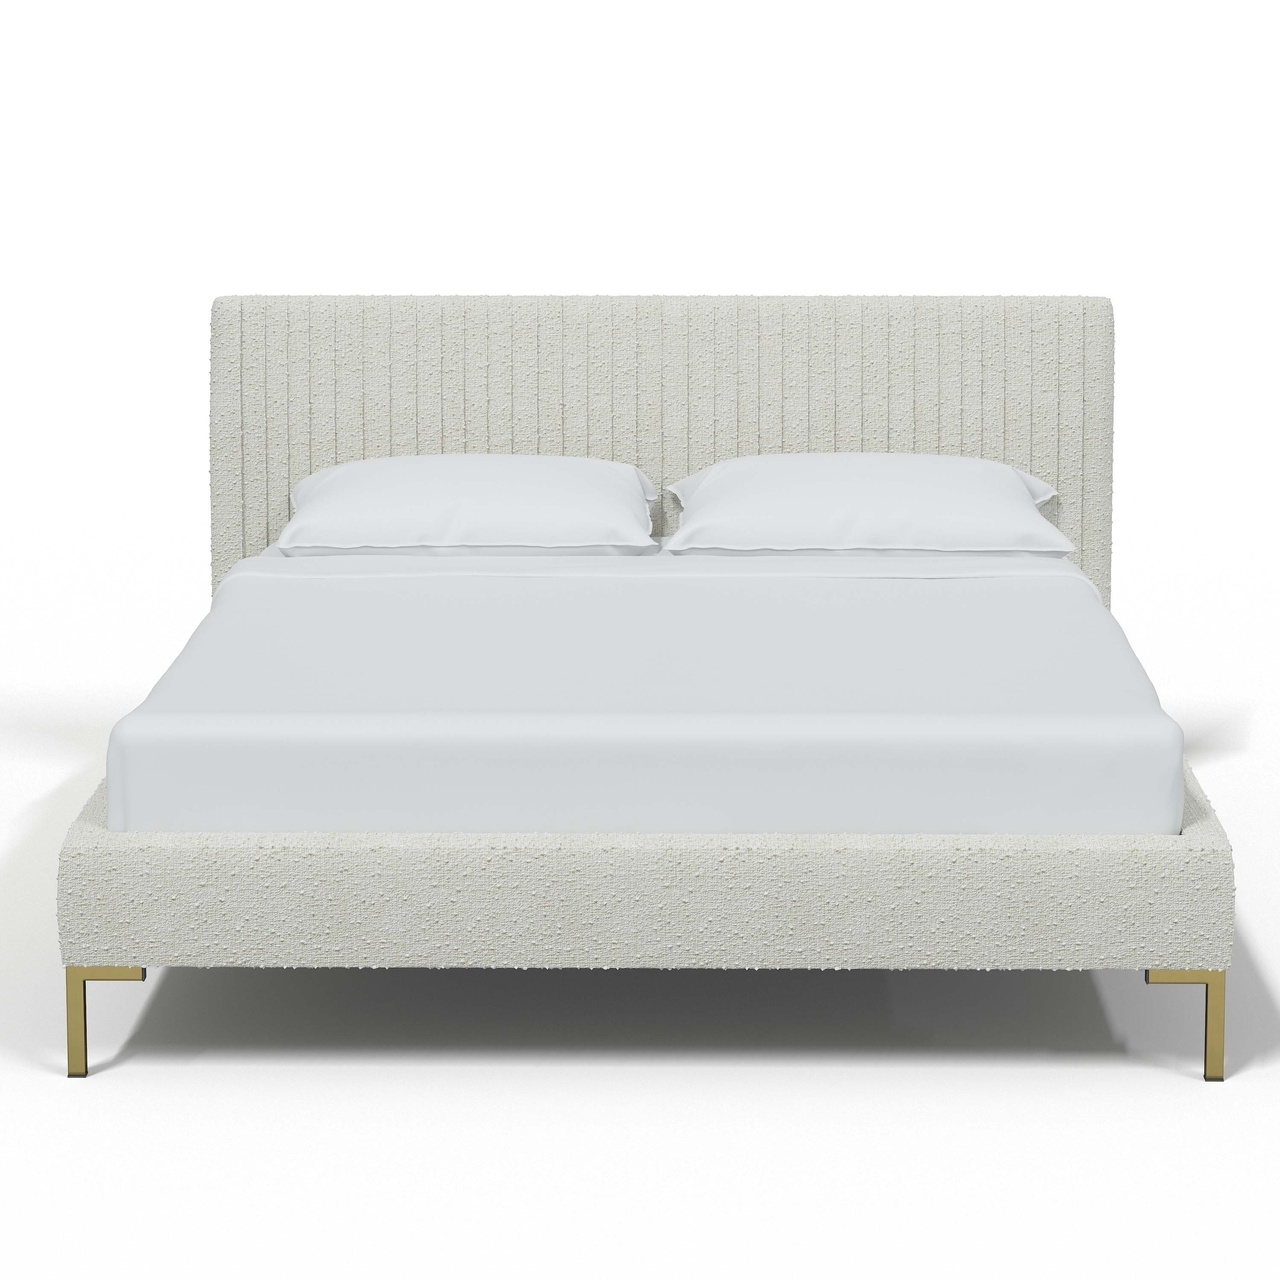 California King Nicolet Platform Bed - Image 1